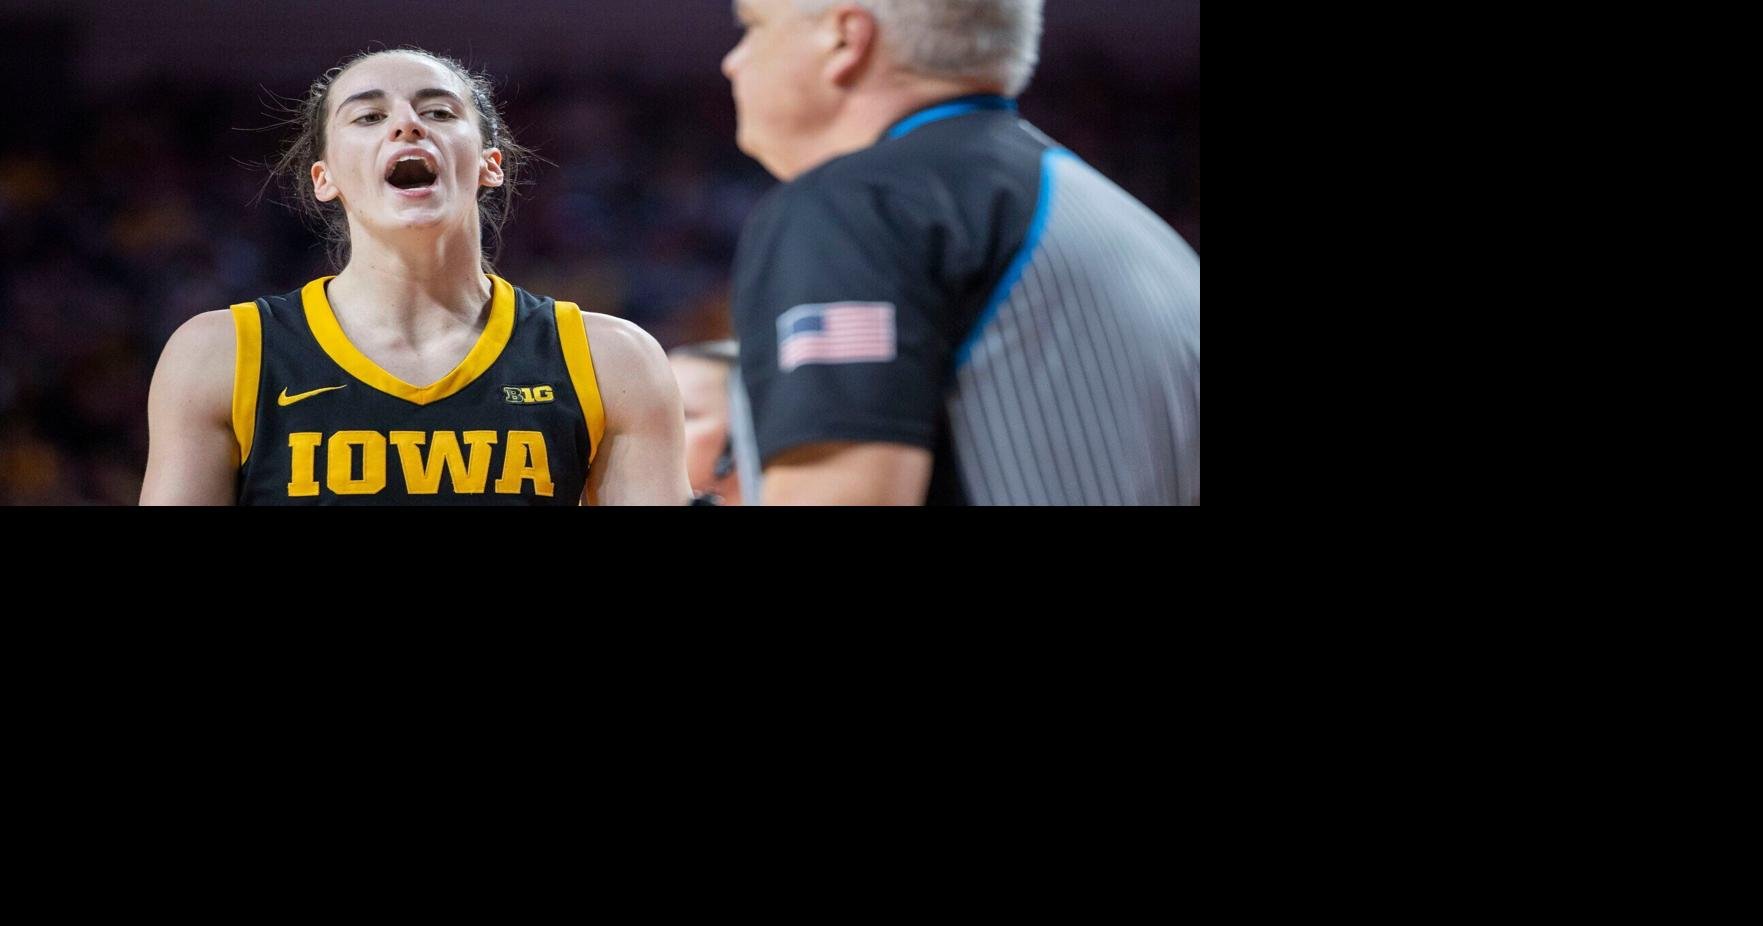 Iowa's Caitlin Clark 8 short of NCAA's career scoring mark